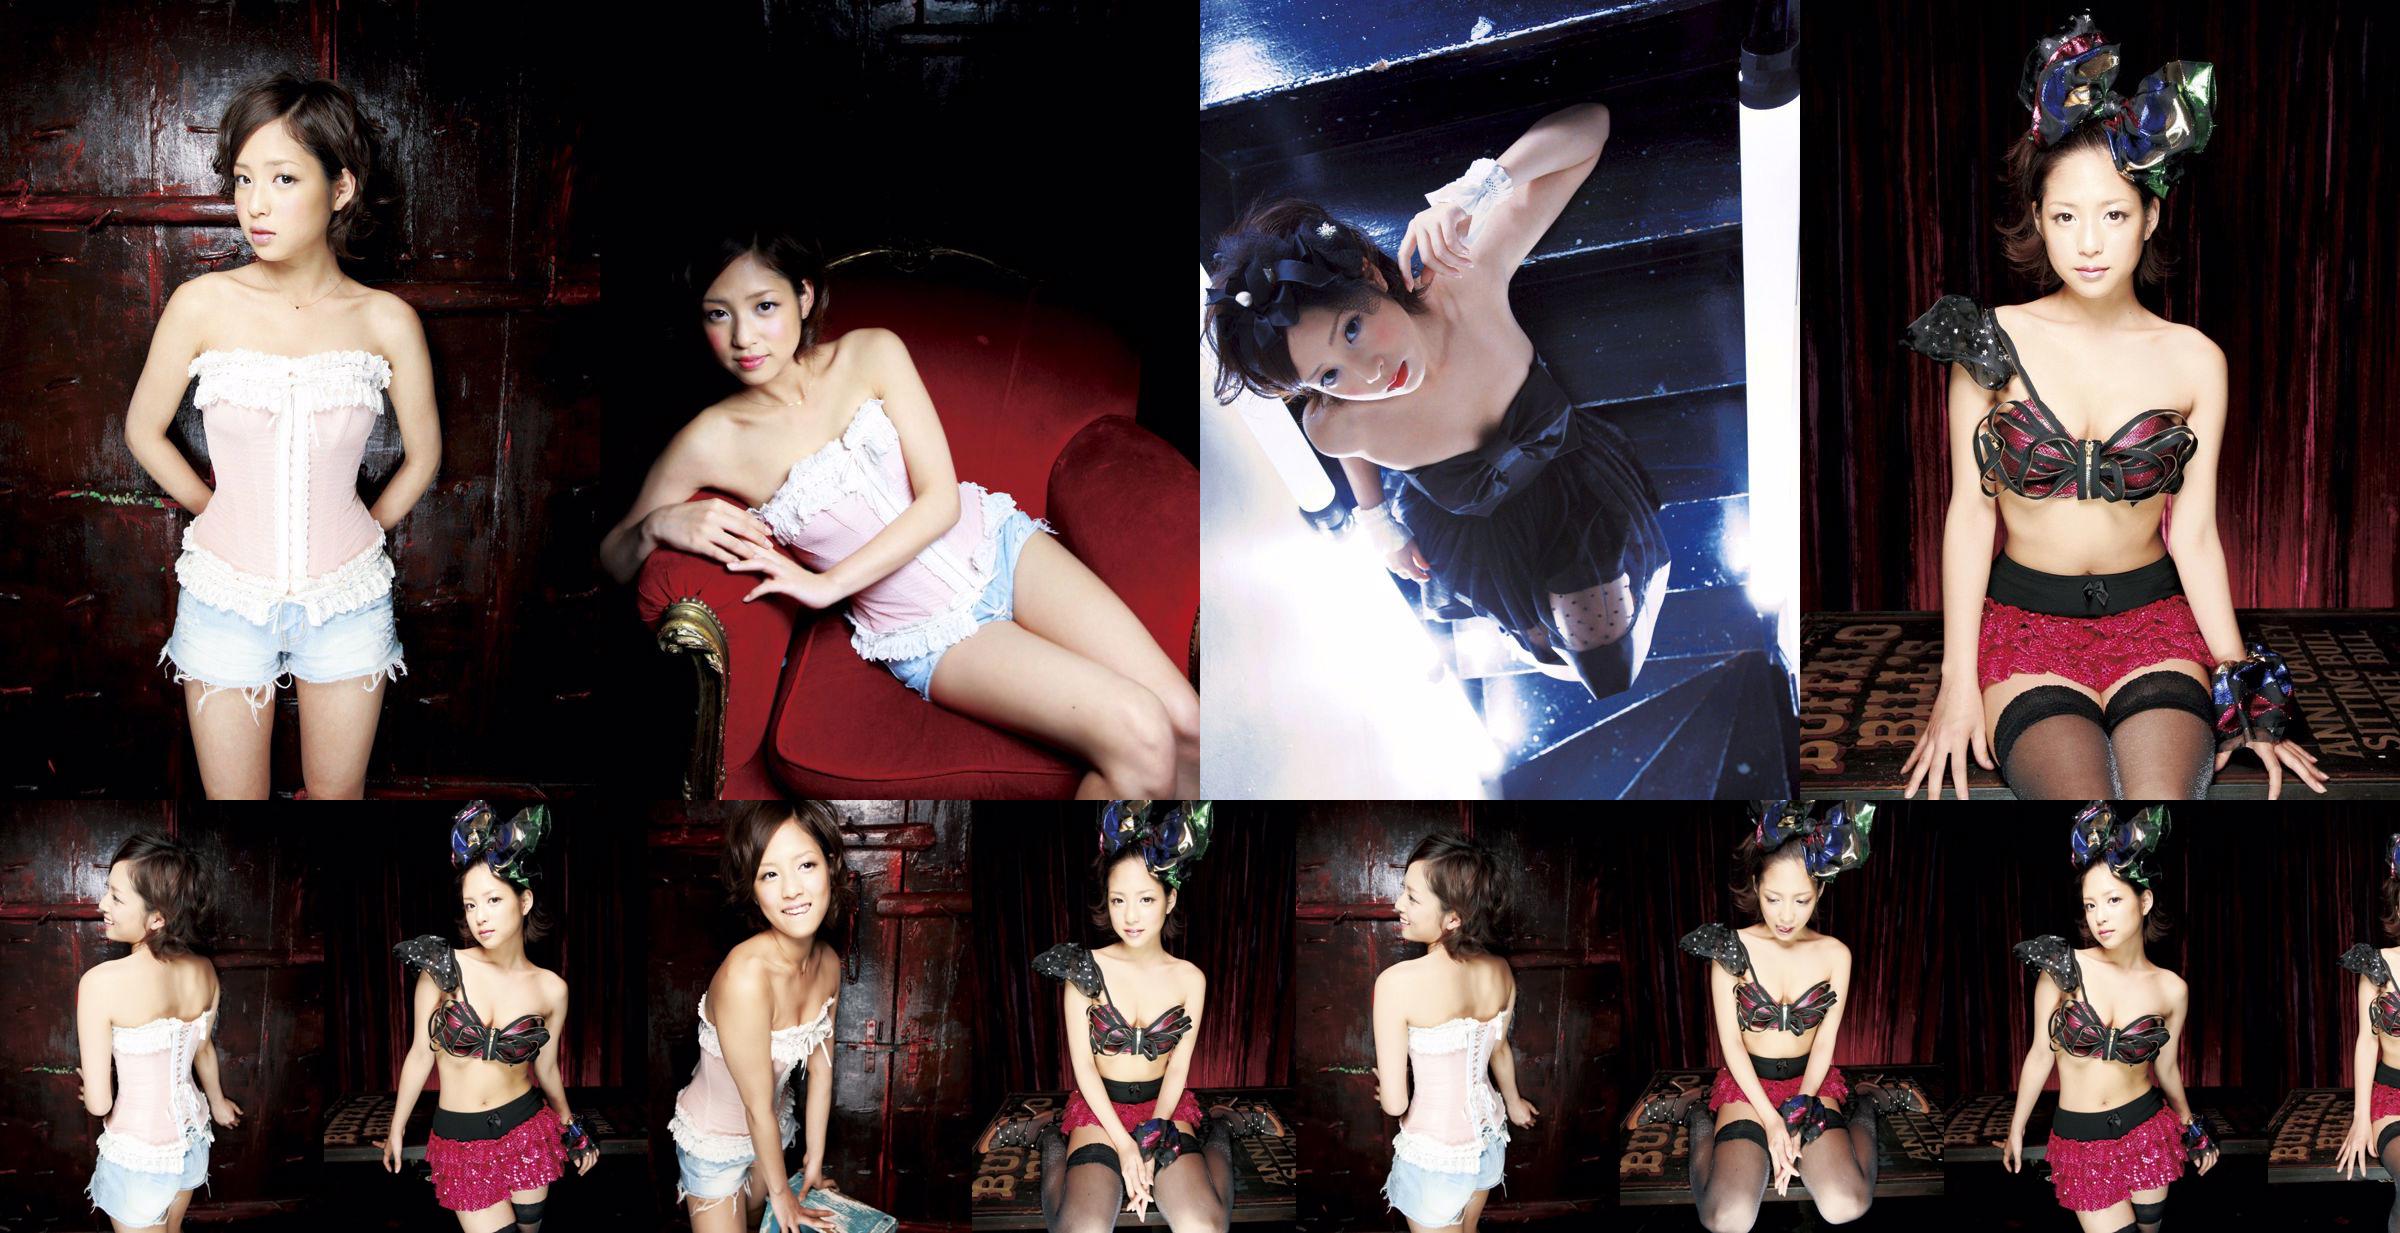 [Sabra.net] Orihara Miyu Moulin Rouge No.91b909 Halaman 1